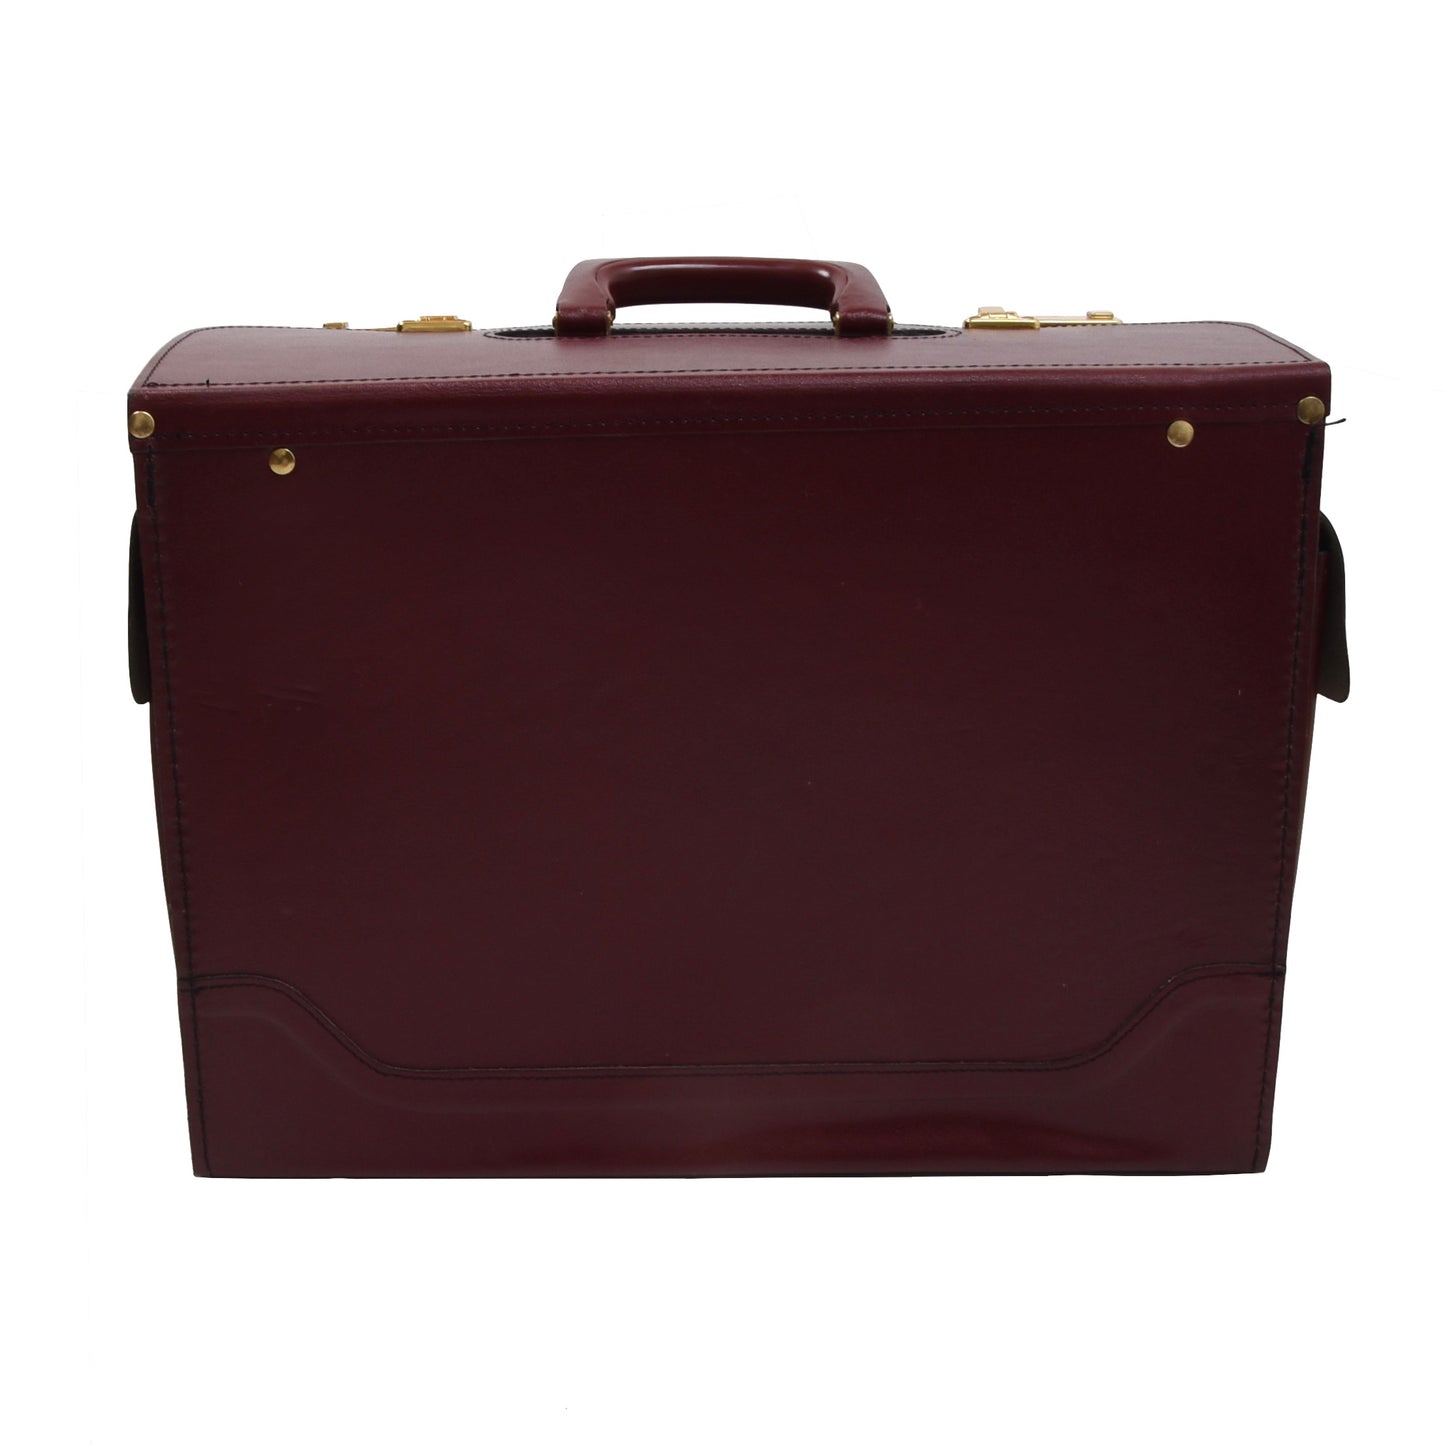 Classic Leather Attache Case - Burgundy